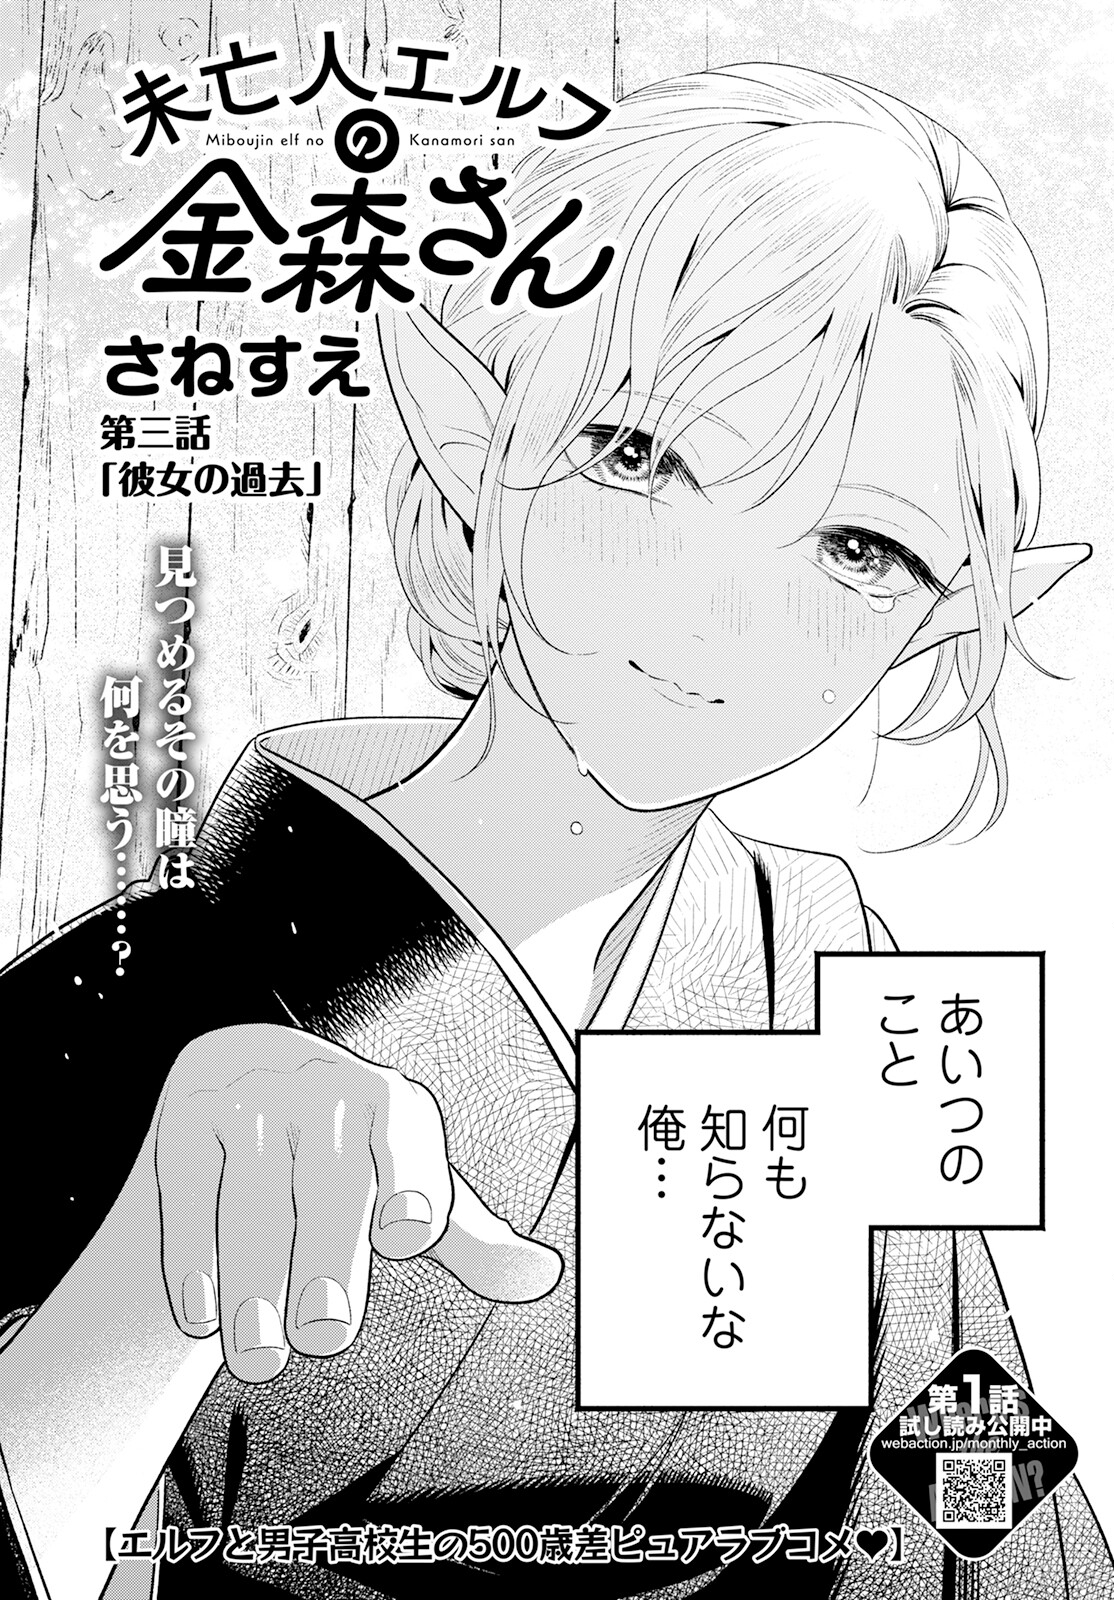 Miboujin Elf no Kanamori-san - Chapter 3 - Page 6